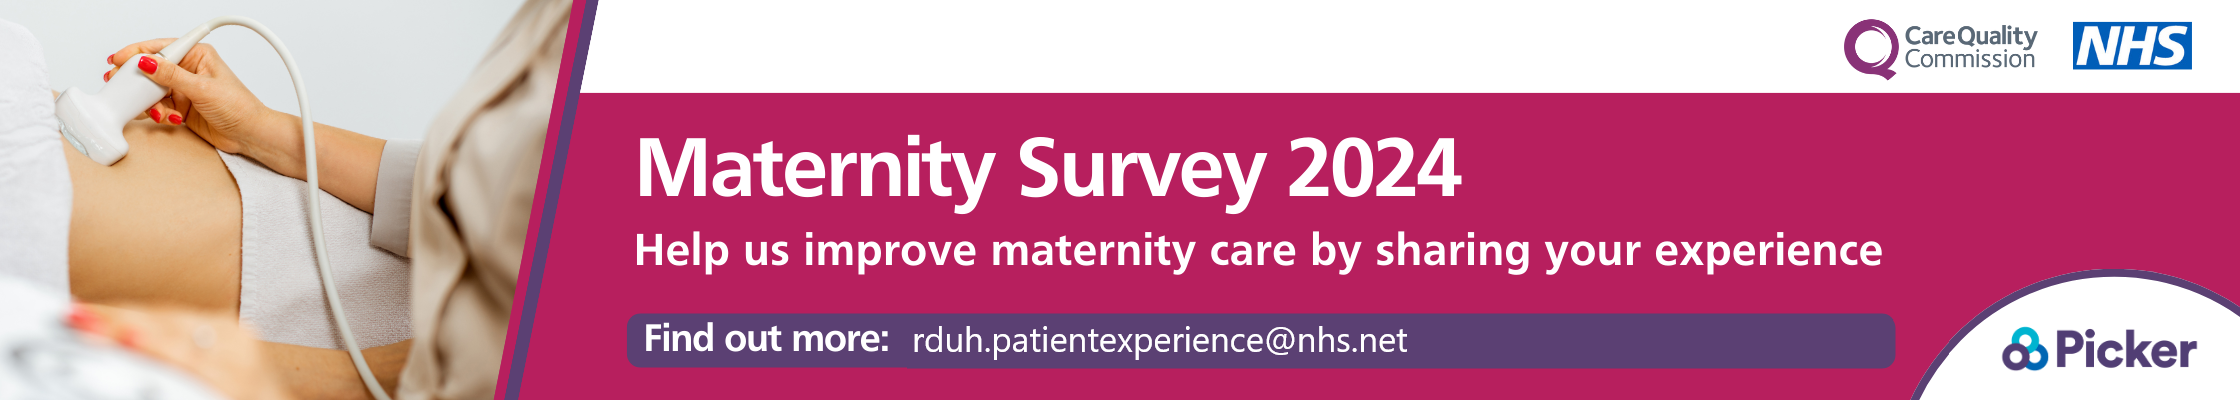 Maternity survey 2024